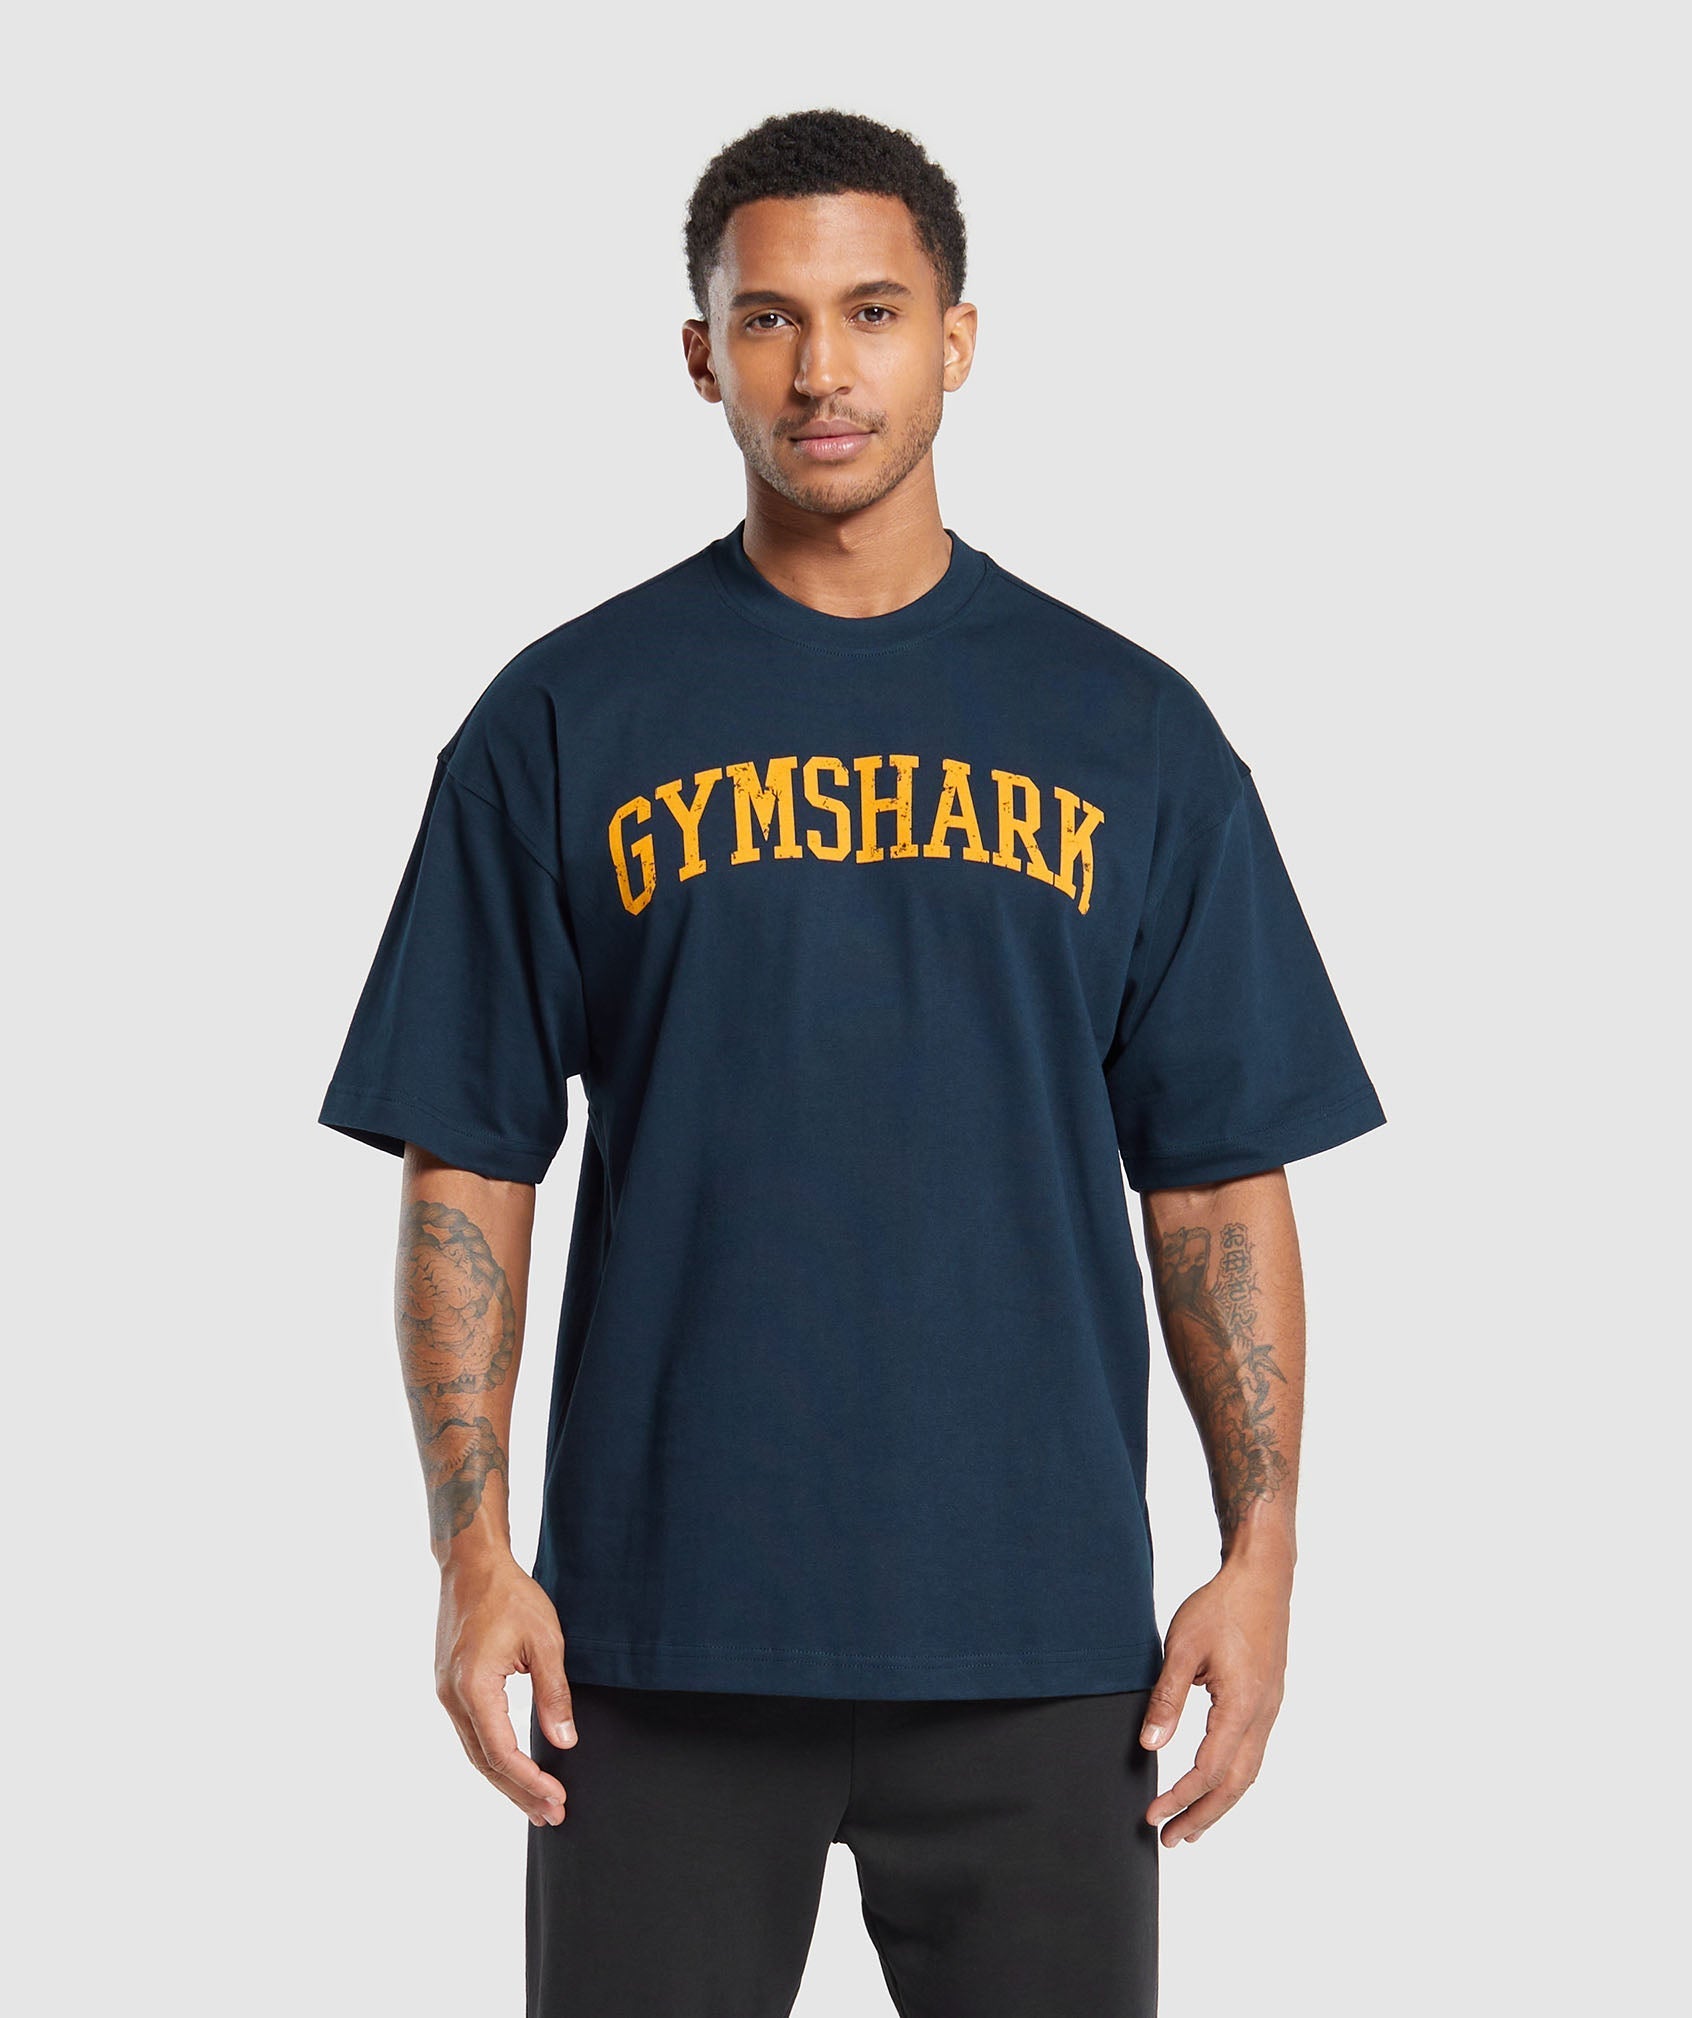 Collegiate T-Shirt in Navy - view 1